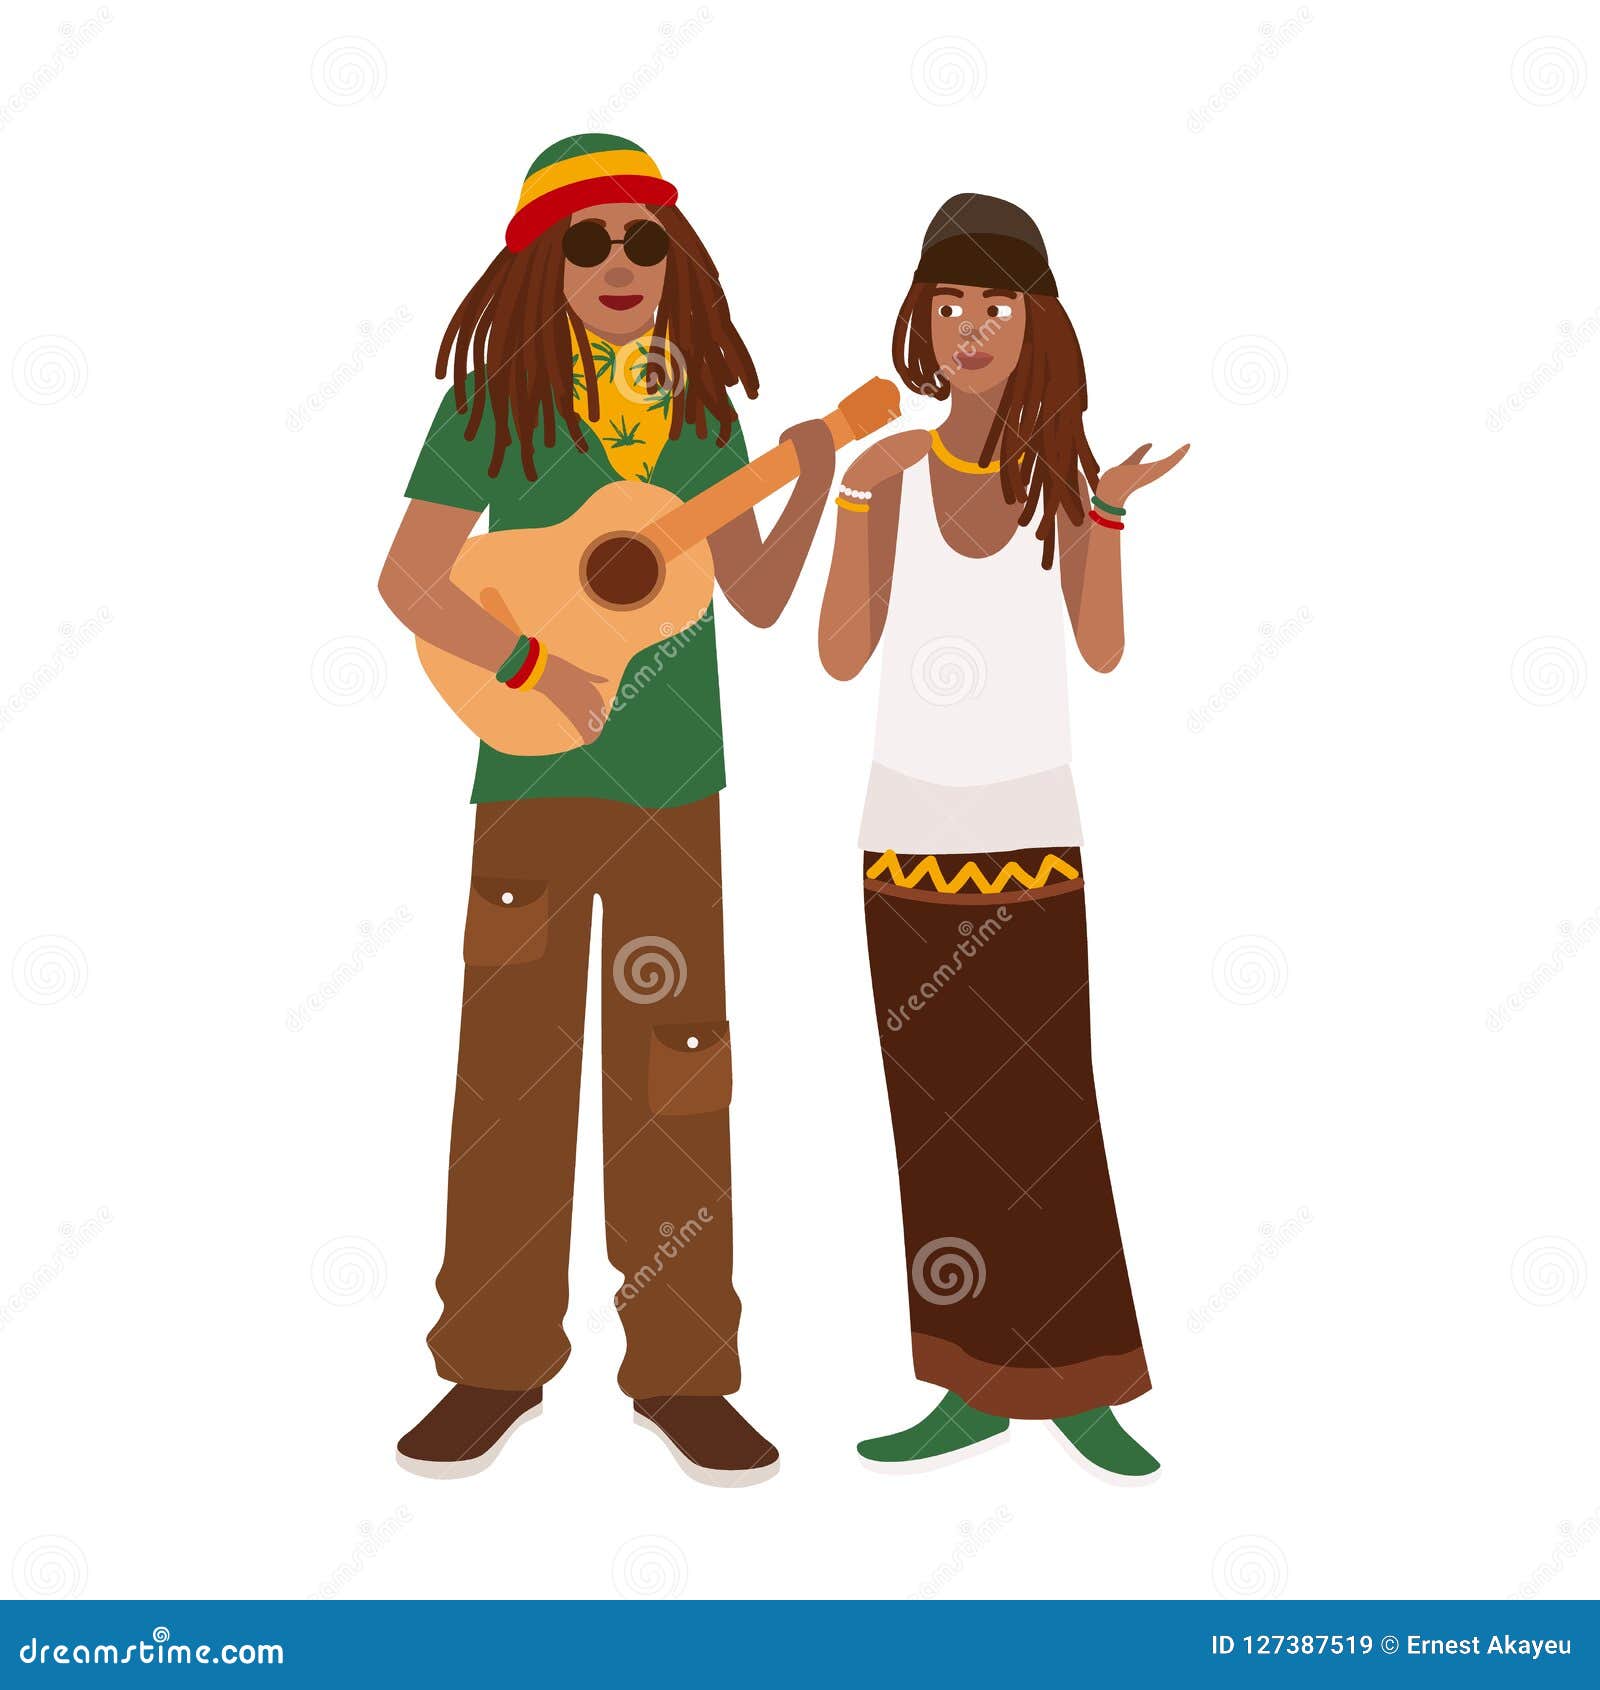 rastafari couple. man wearing rastacap and playing guitar and woman standing together. boyfriend and girlfriend